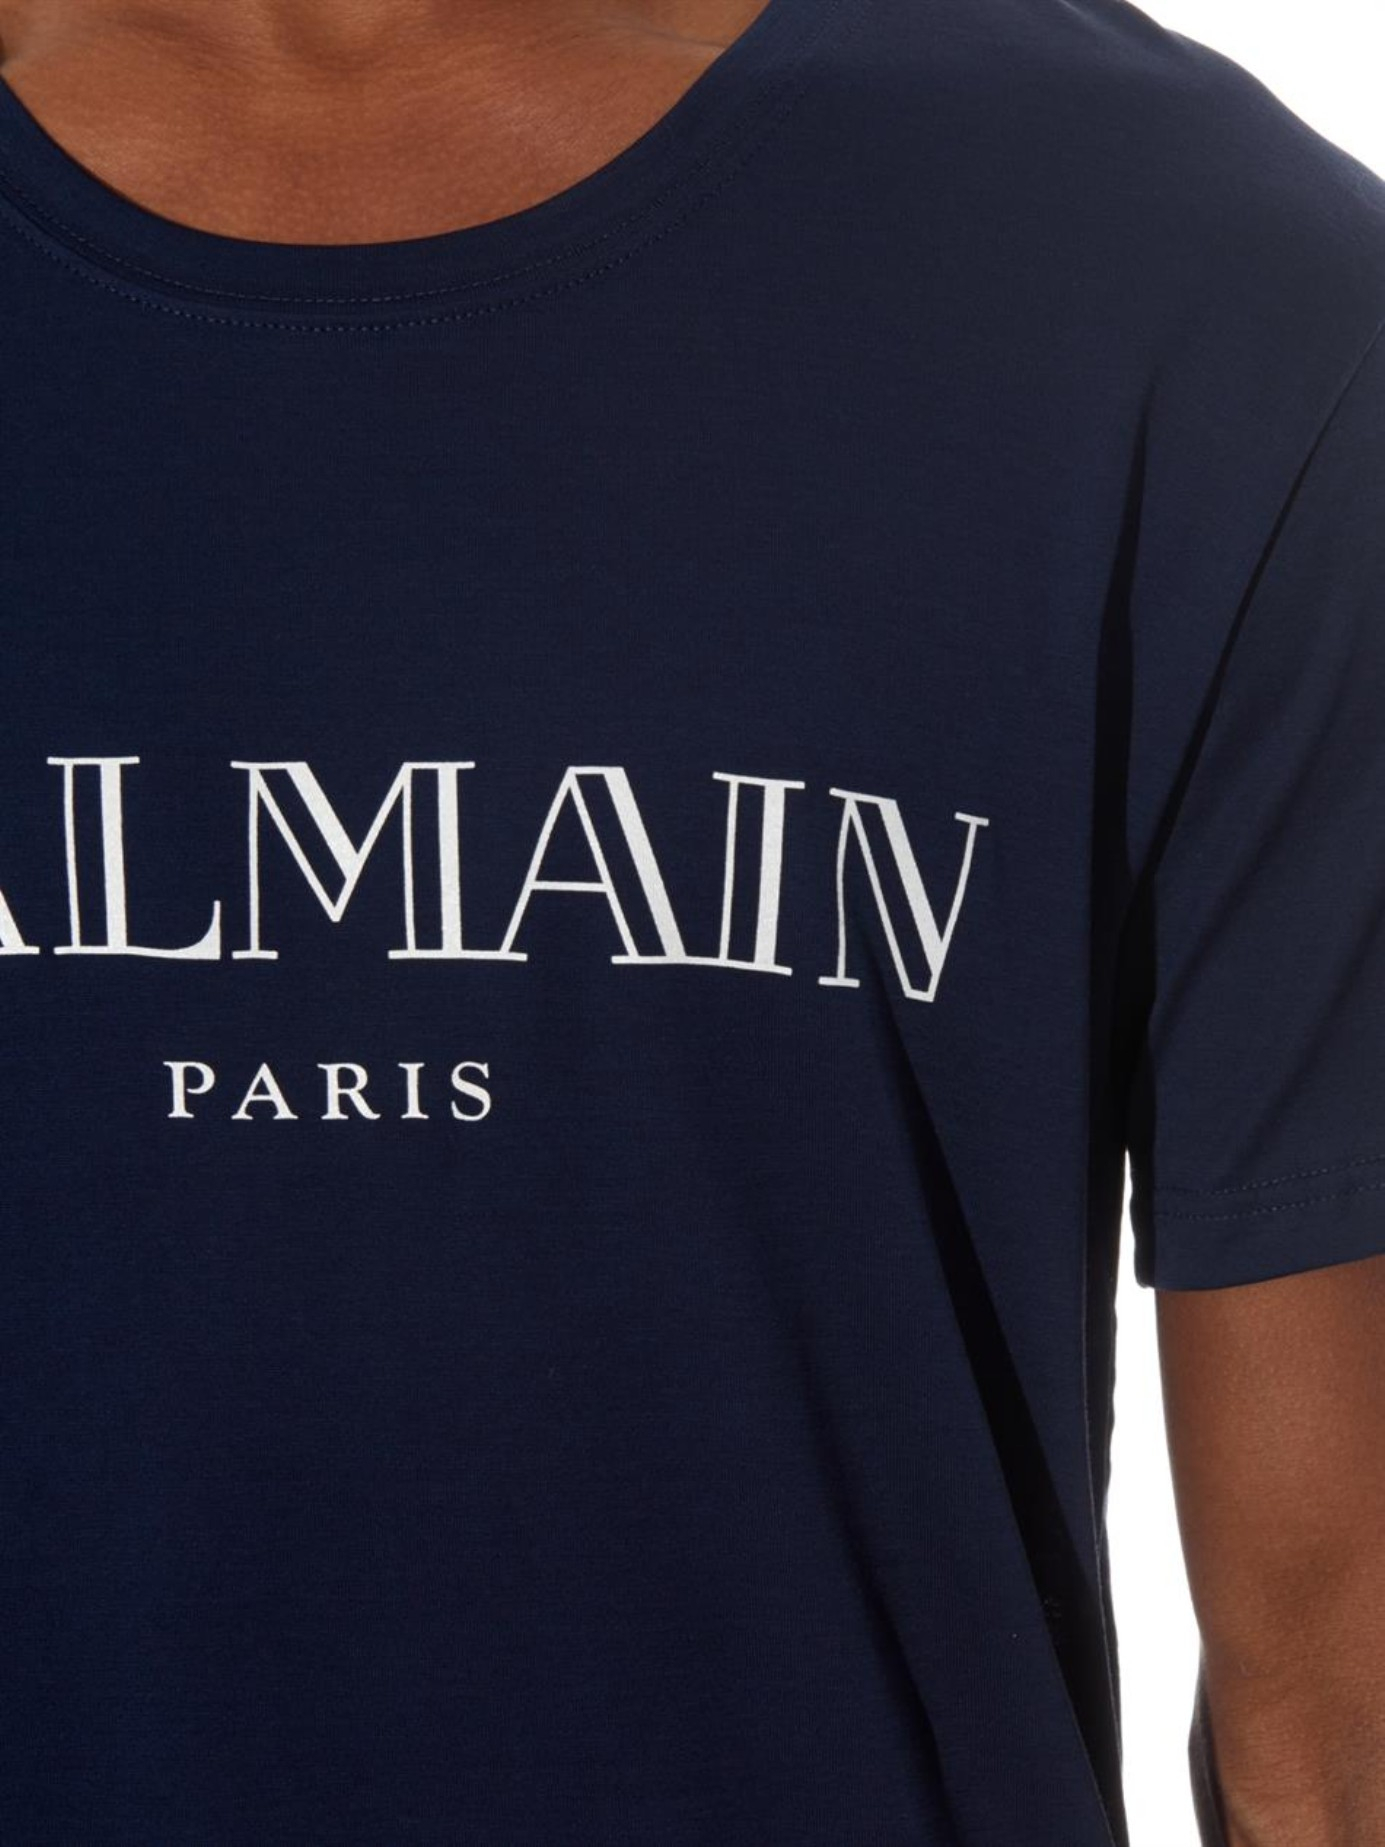 Lyst - Balmain Logo-Print Cotton-Jersey T-Shirt in Blue for Men